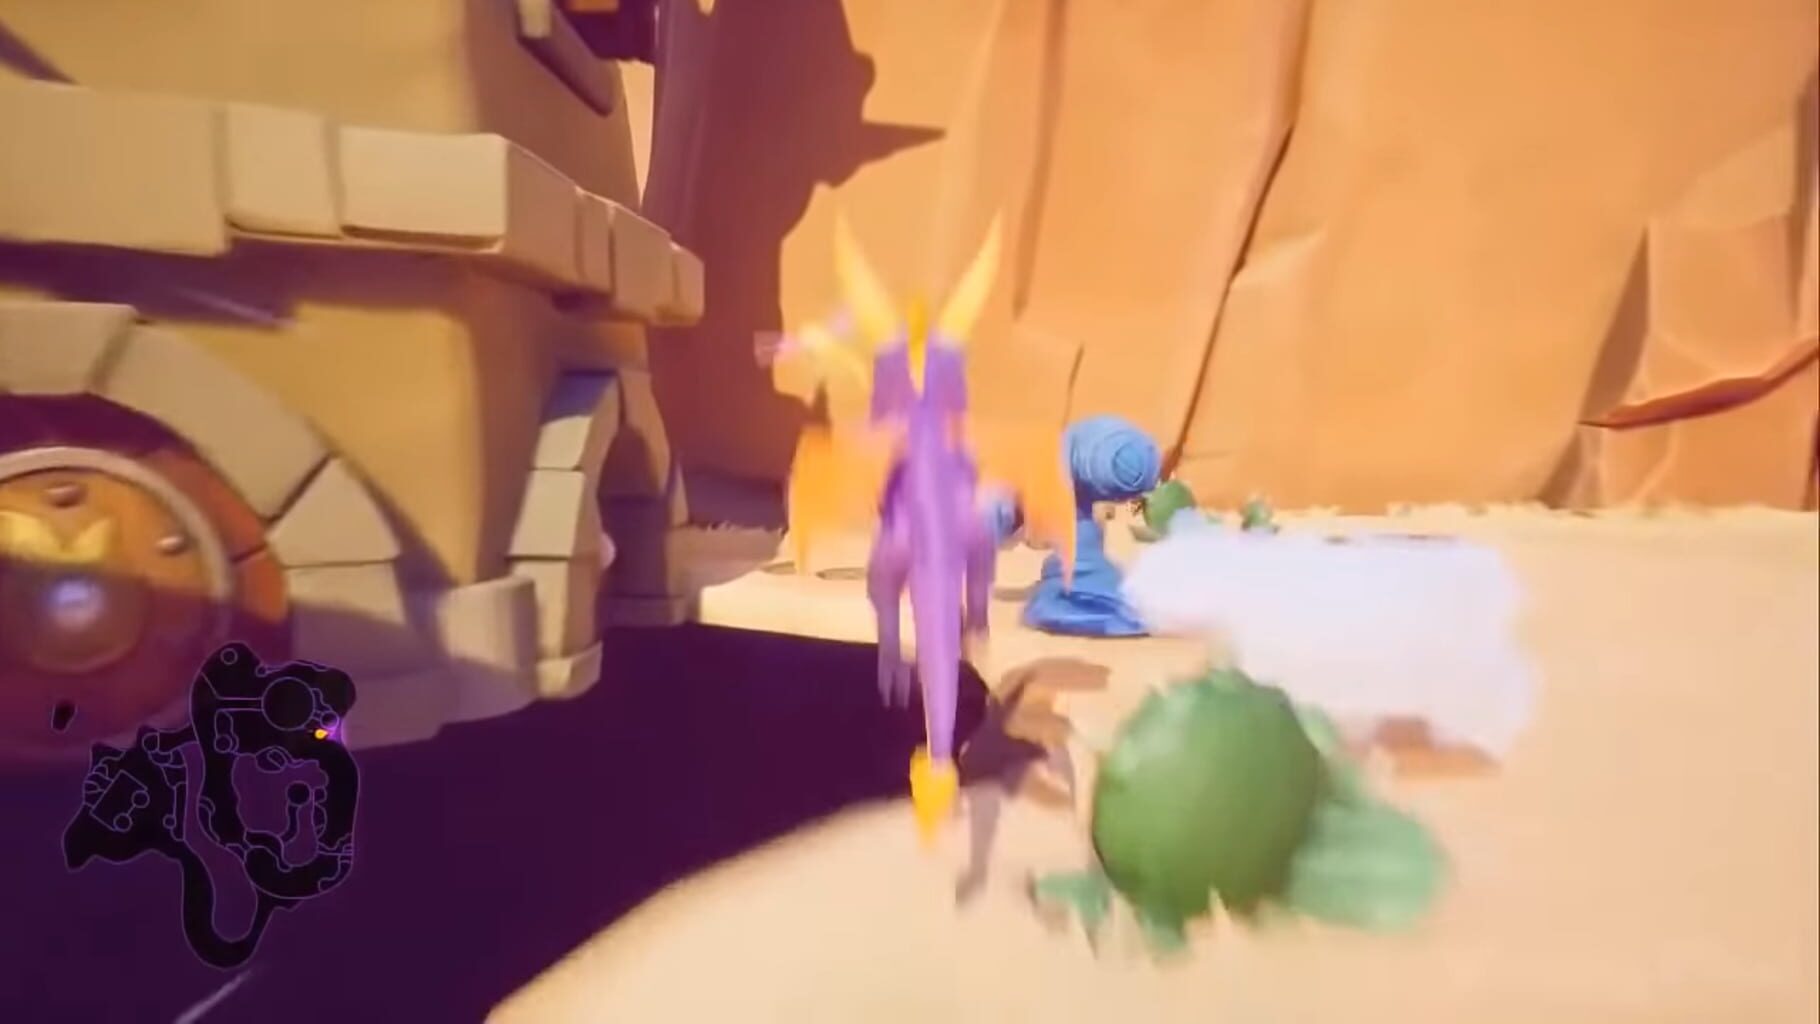 Spyro the Dragon Image